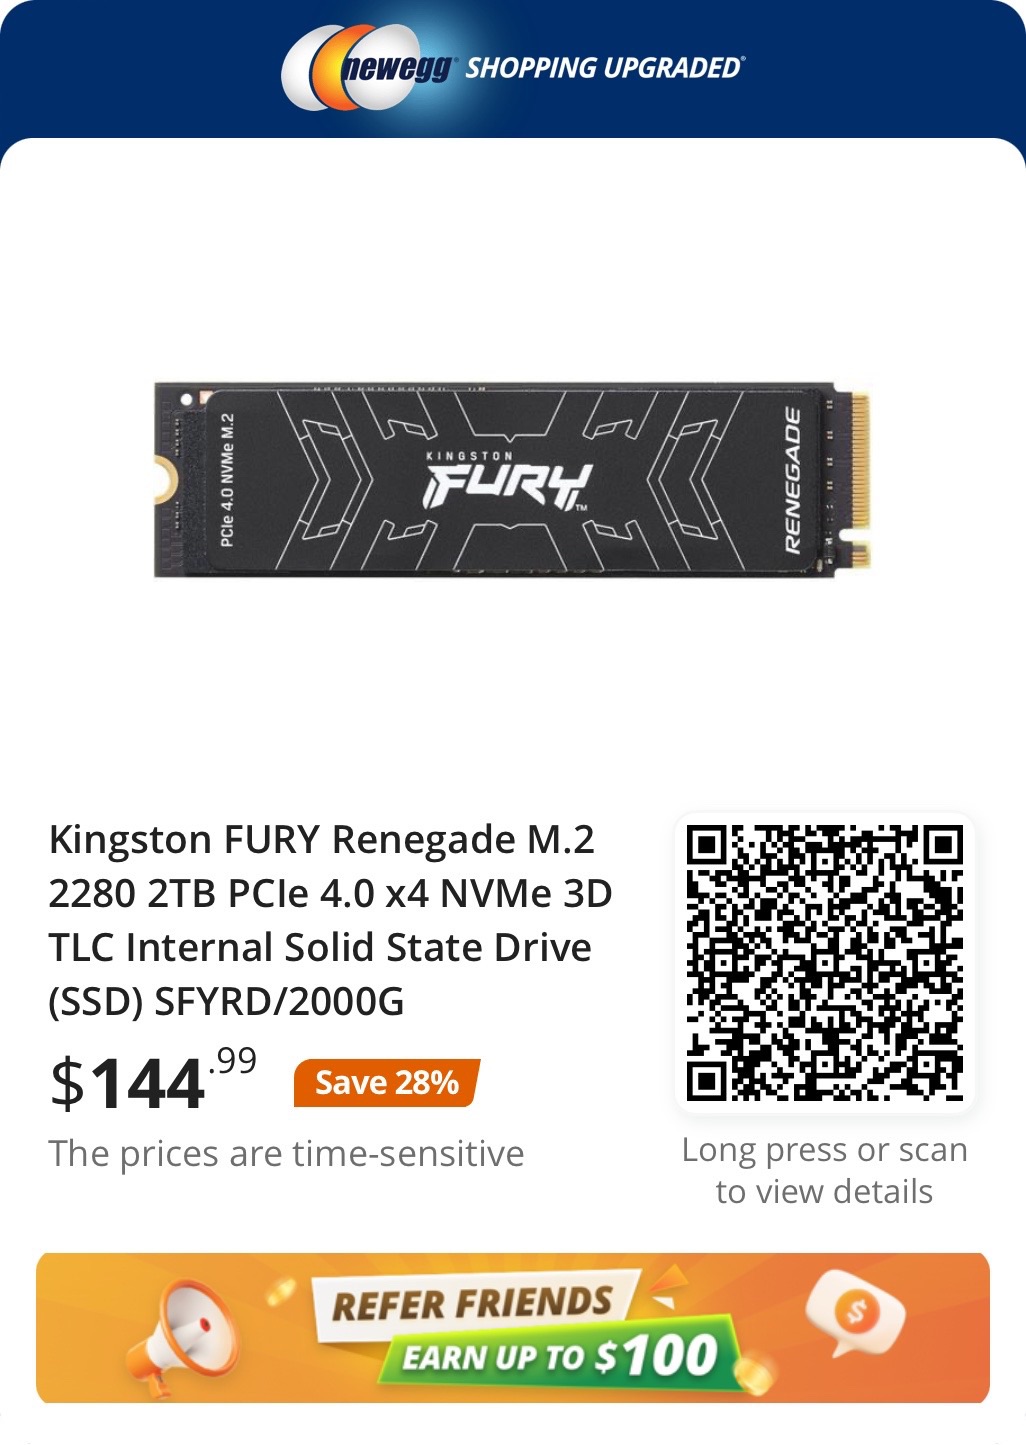 Kingston FURY Renegade M.2 2280 2TB PCIe 4.0 x4 NVMe 3D TLC Internal Solid State Drive (SSD) SFYRD/2000G Internal SSDs - Newegg.com